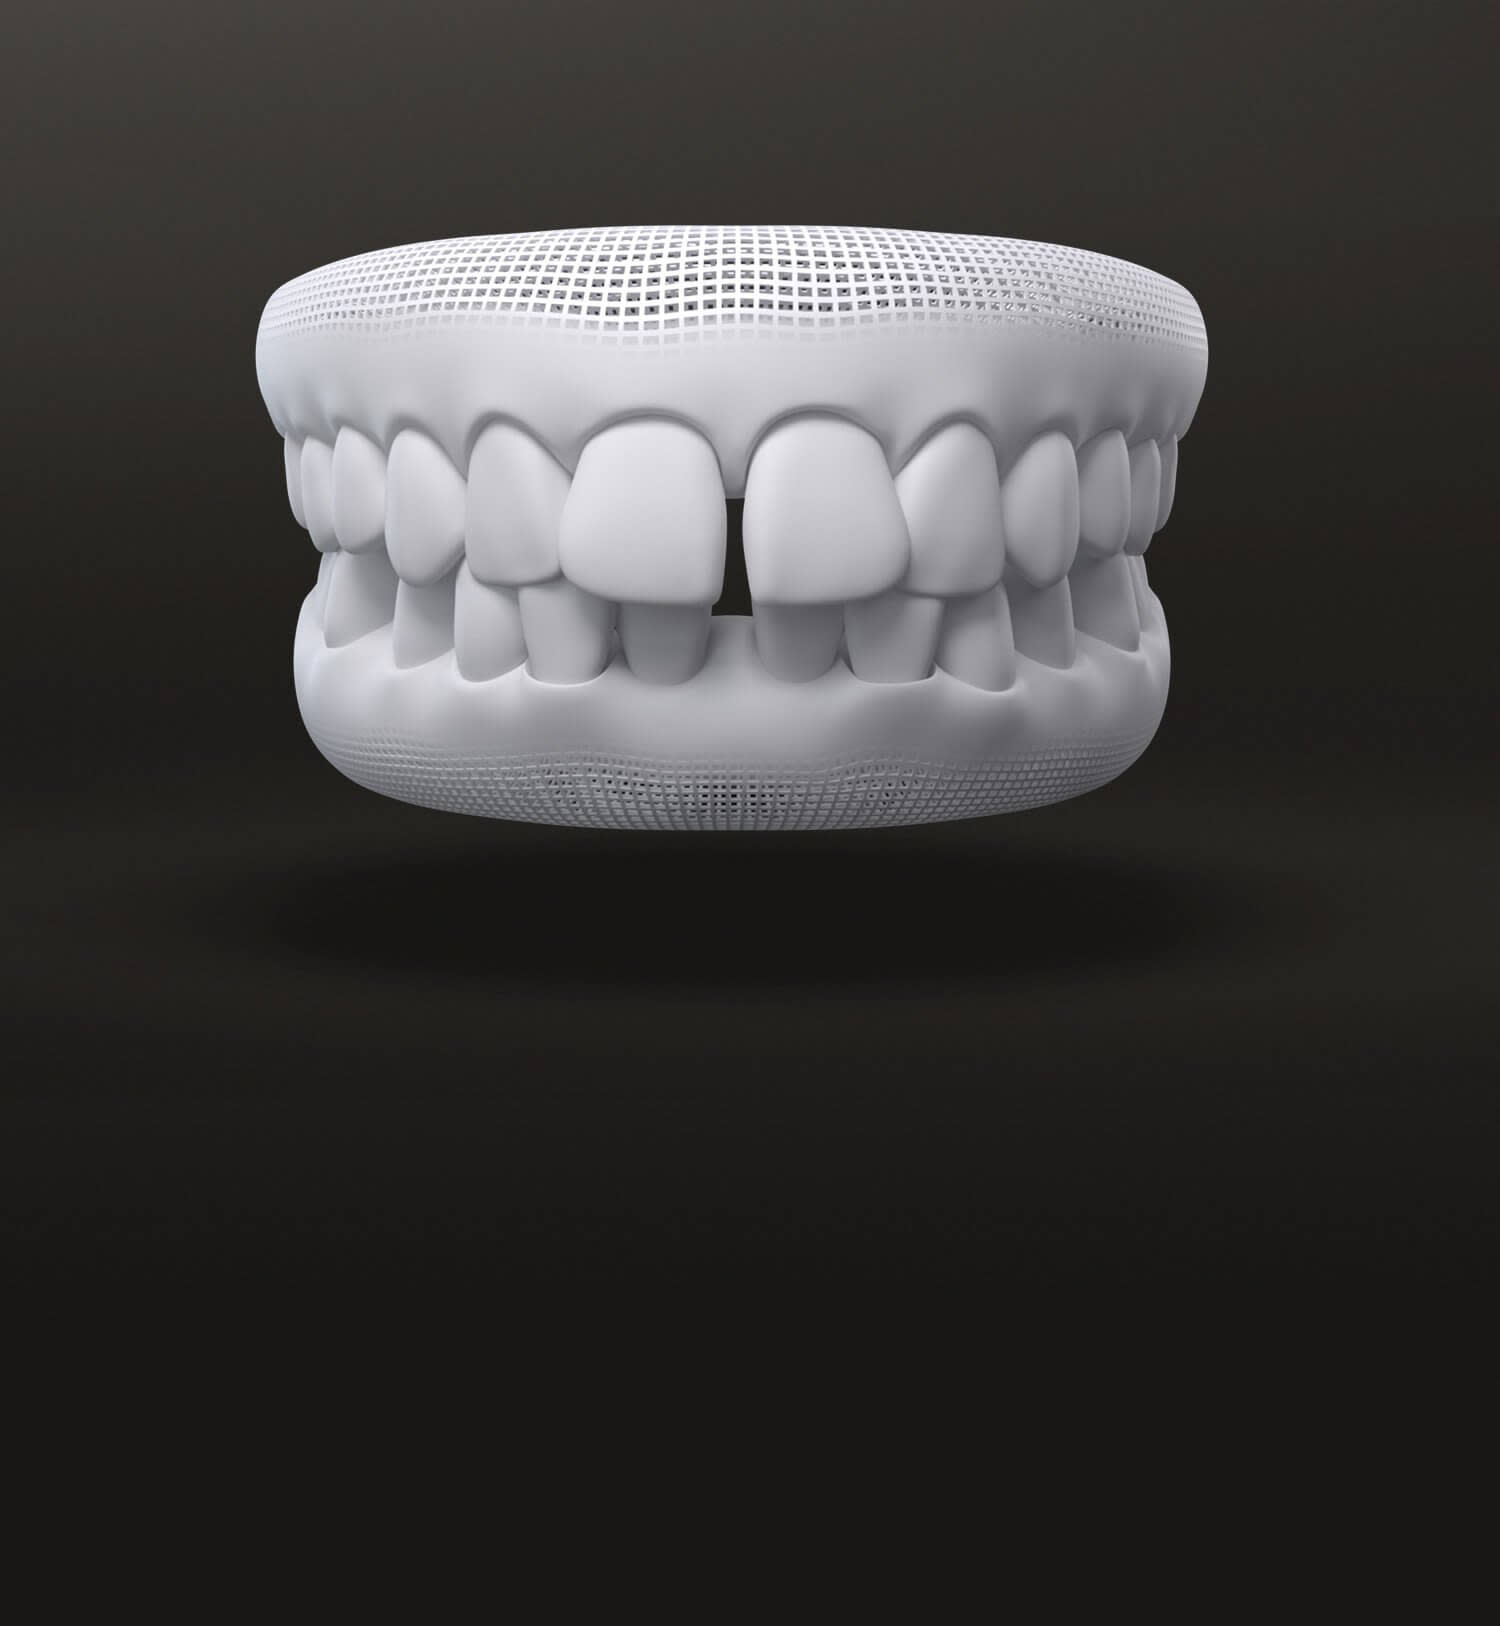 Gap teeth 3d model - Invisalign treatments - Europe